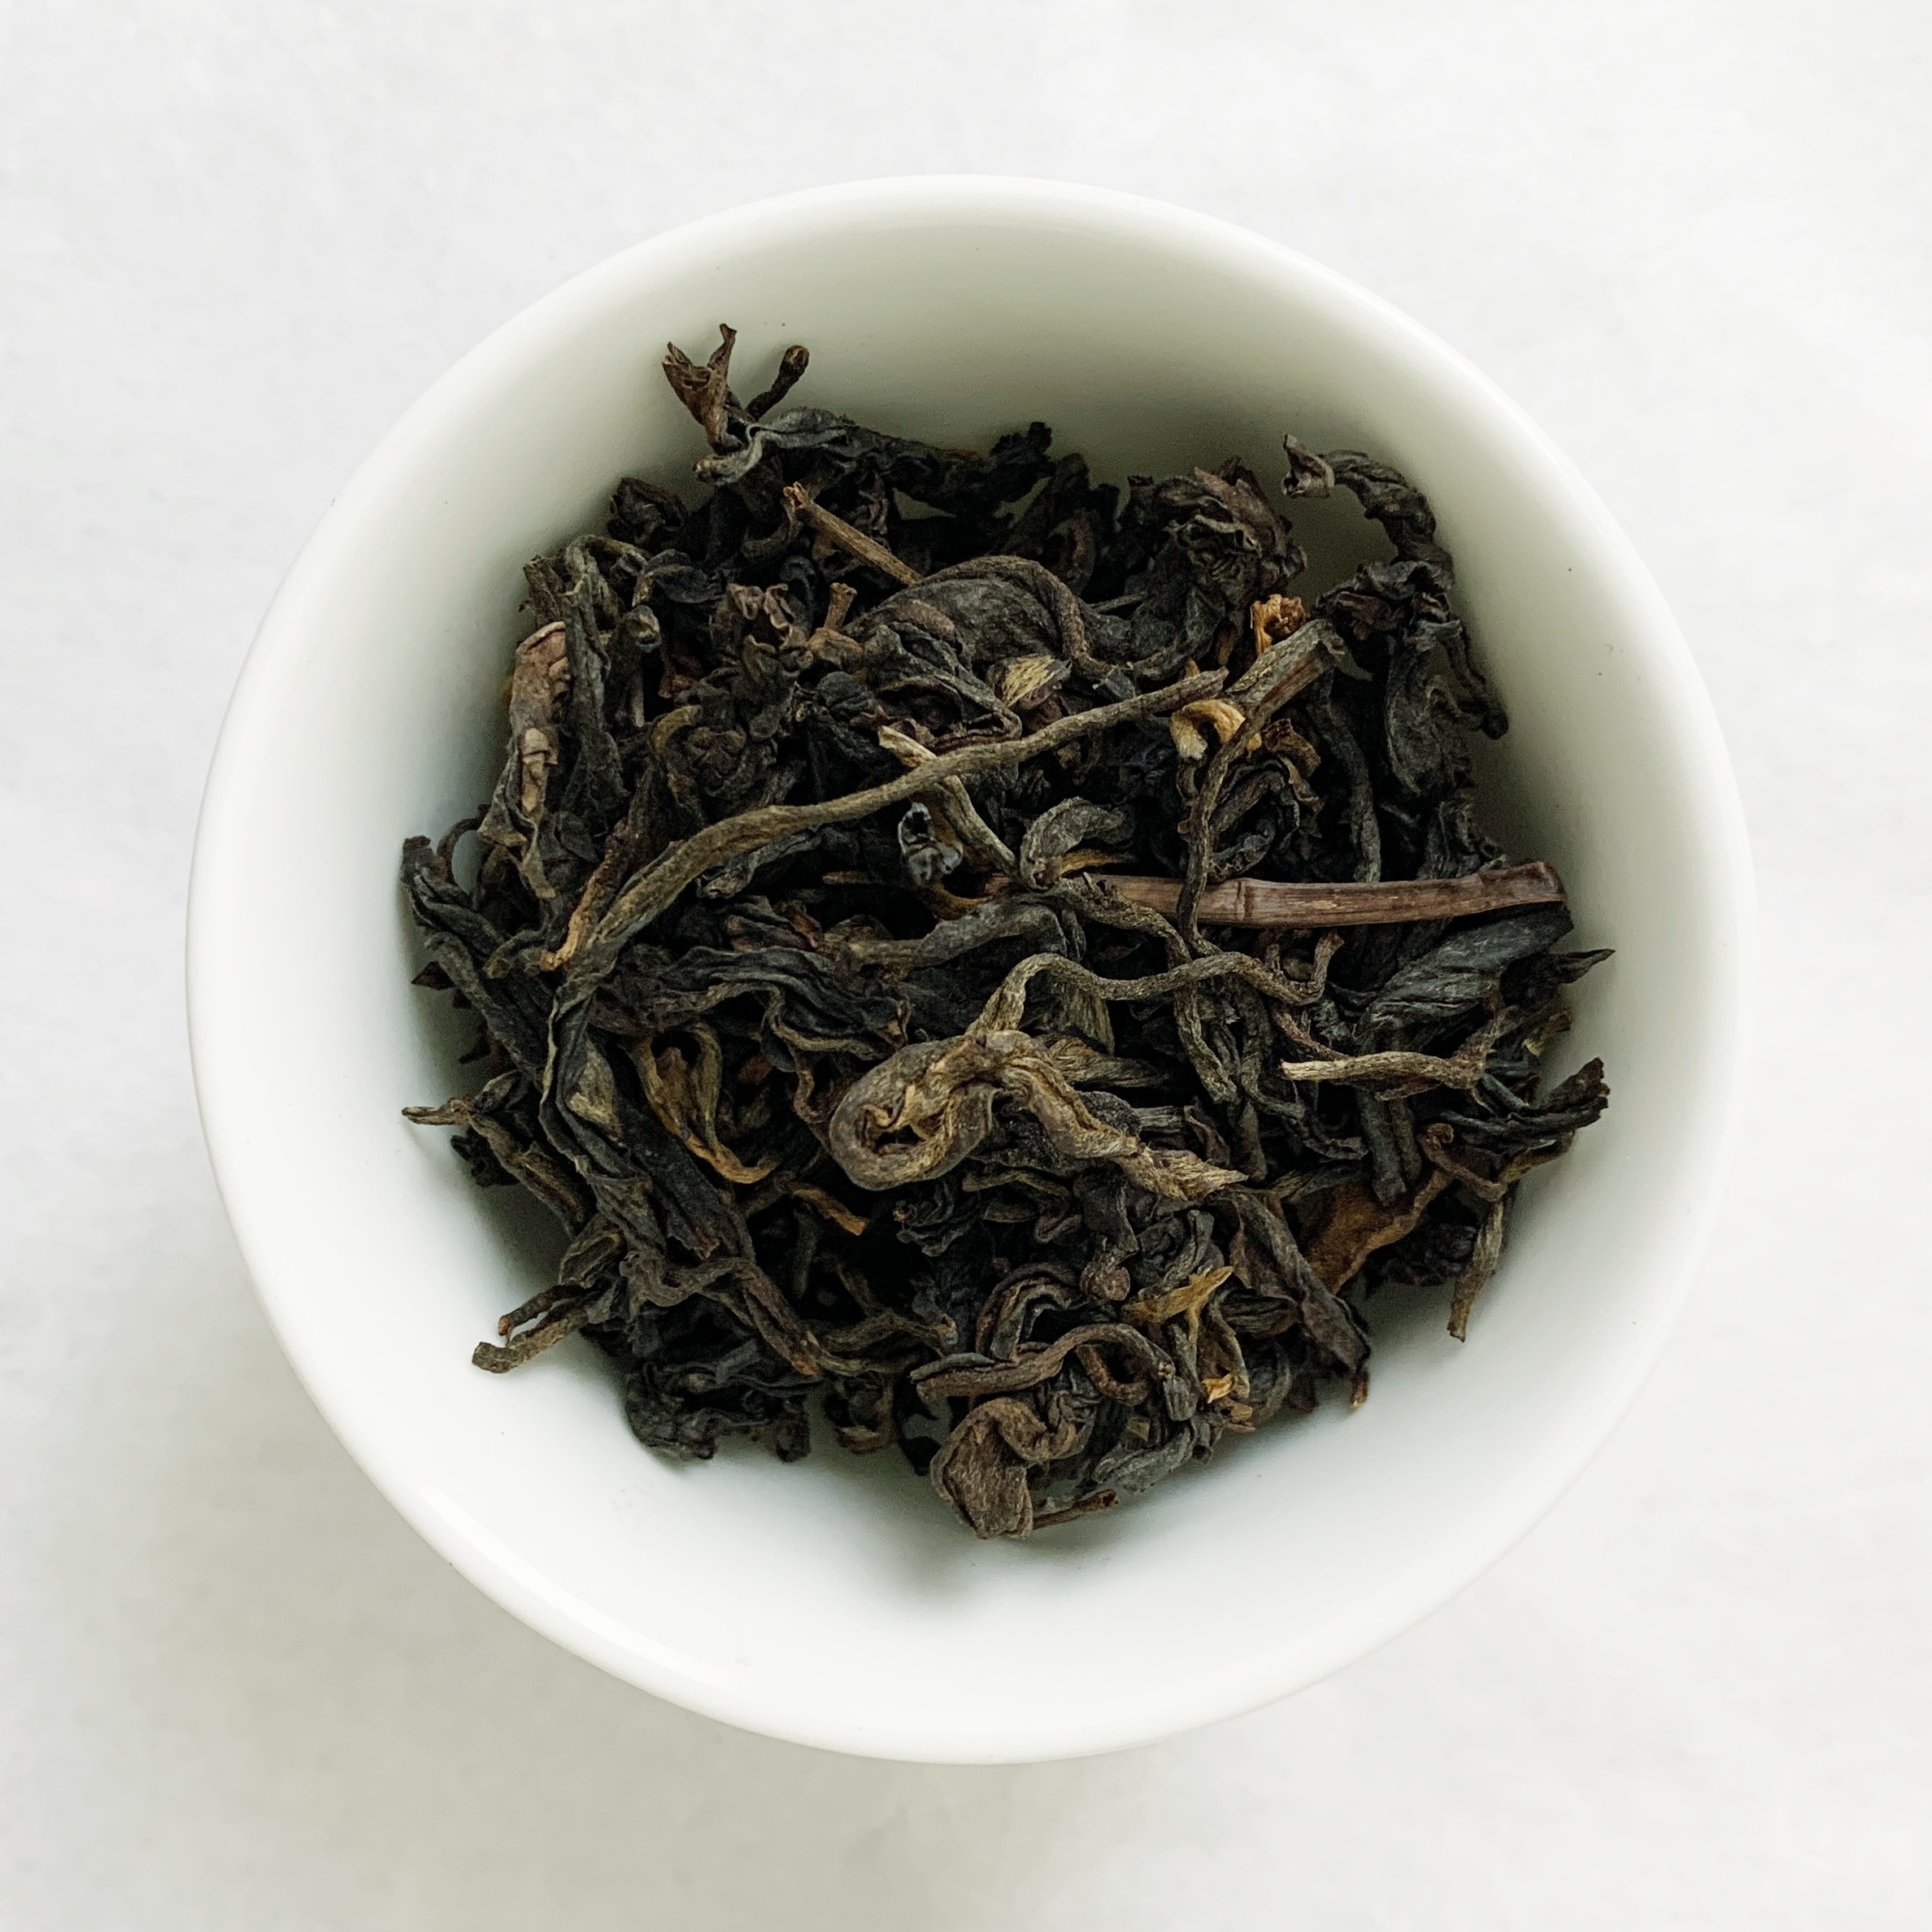 YIWU WILD TEA – ANCIENT TREES